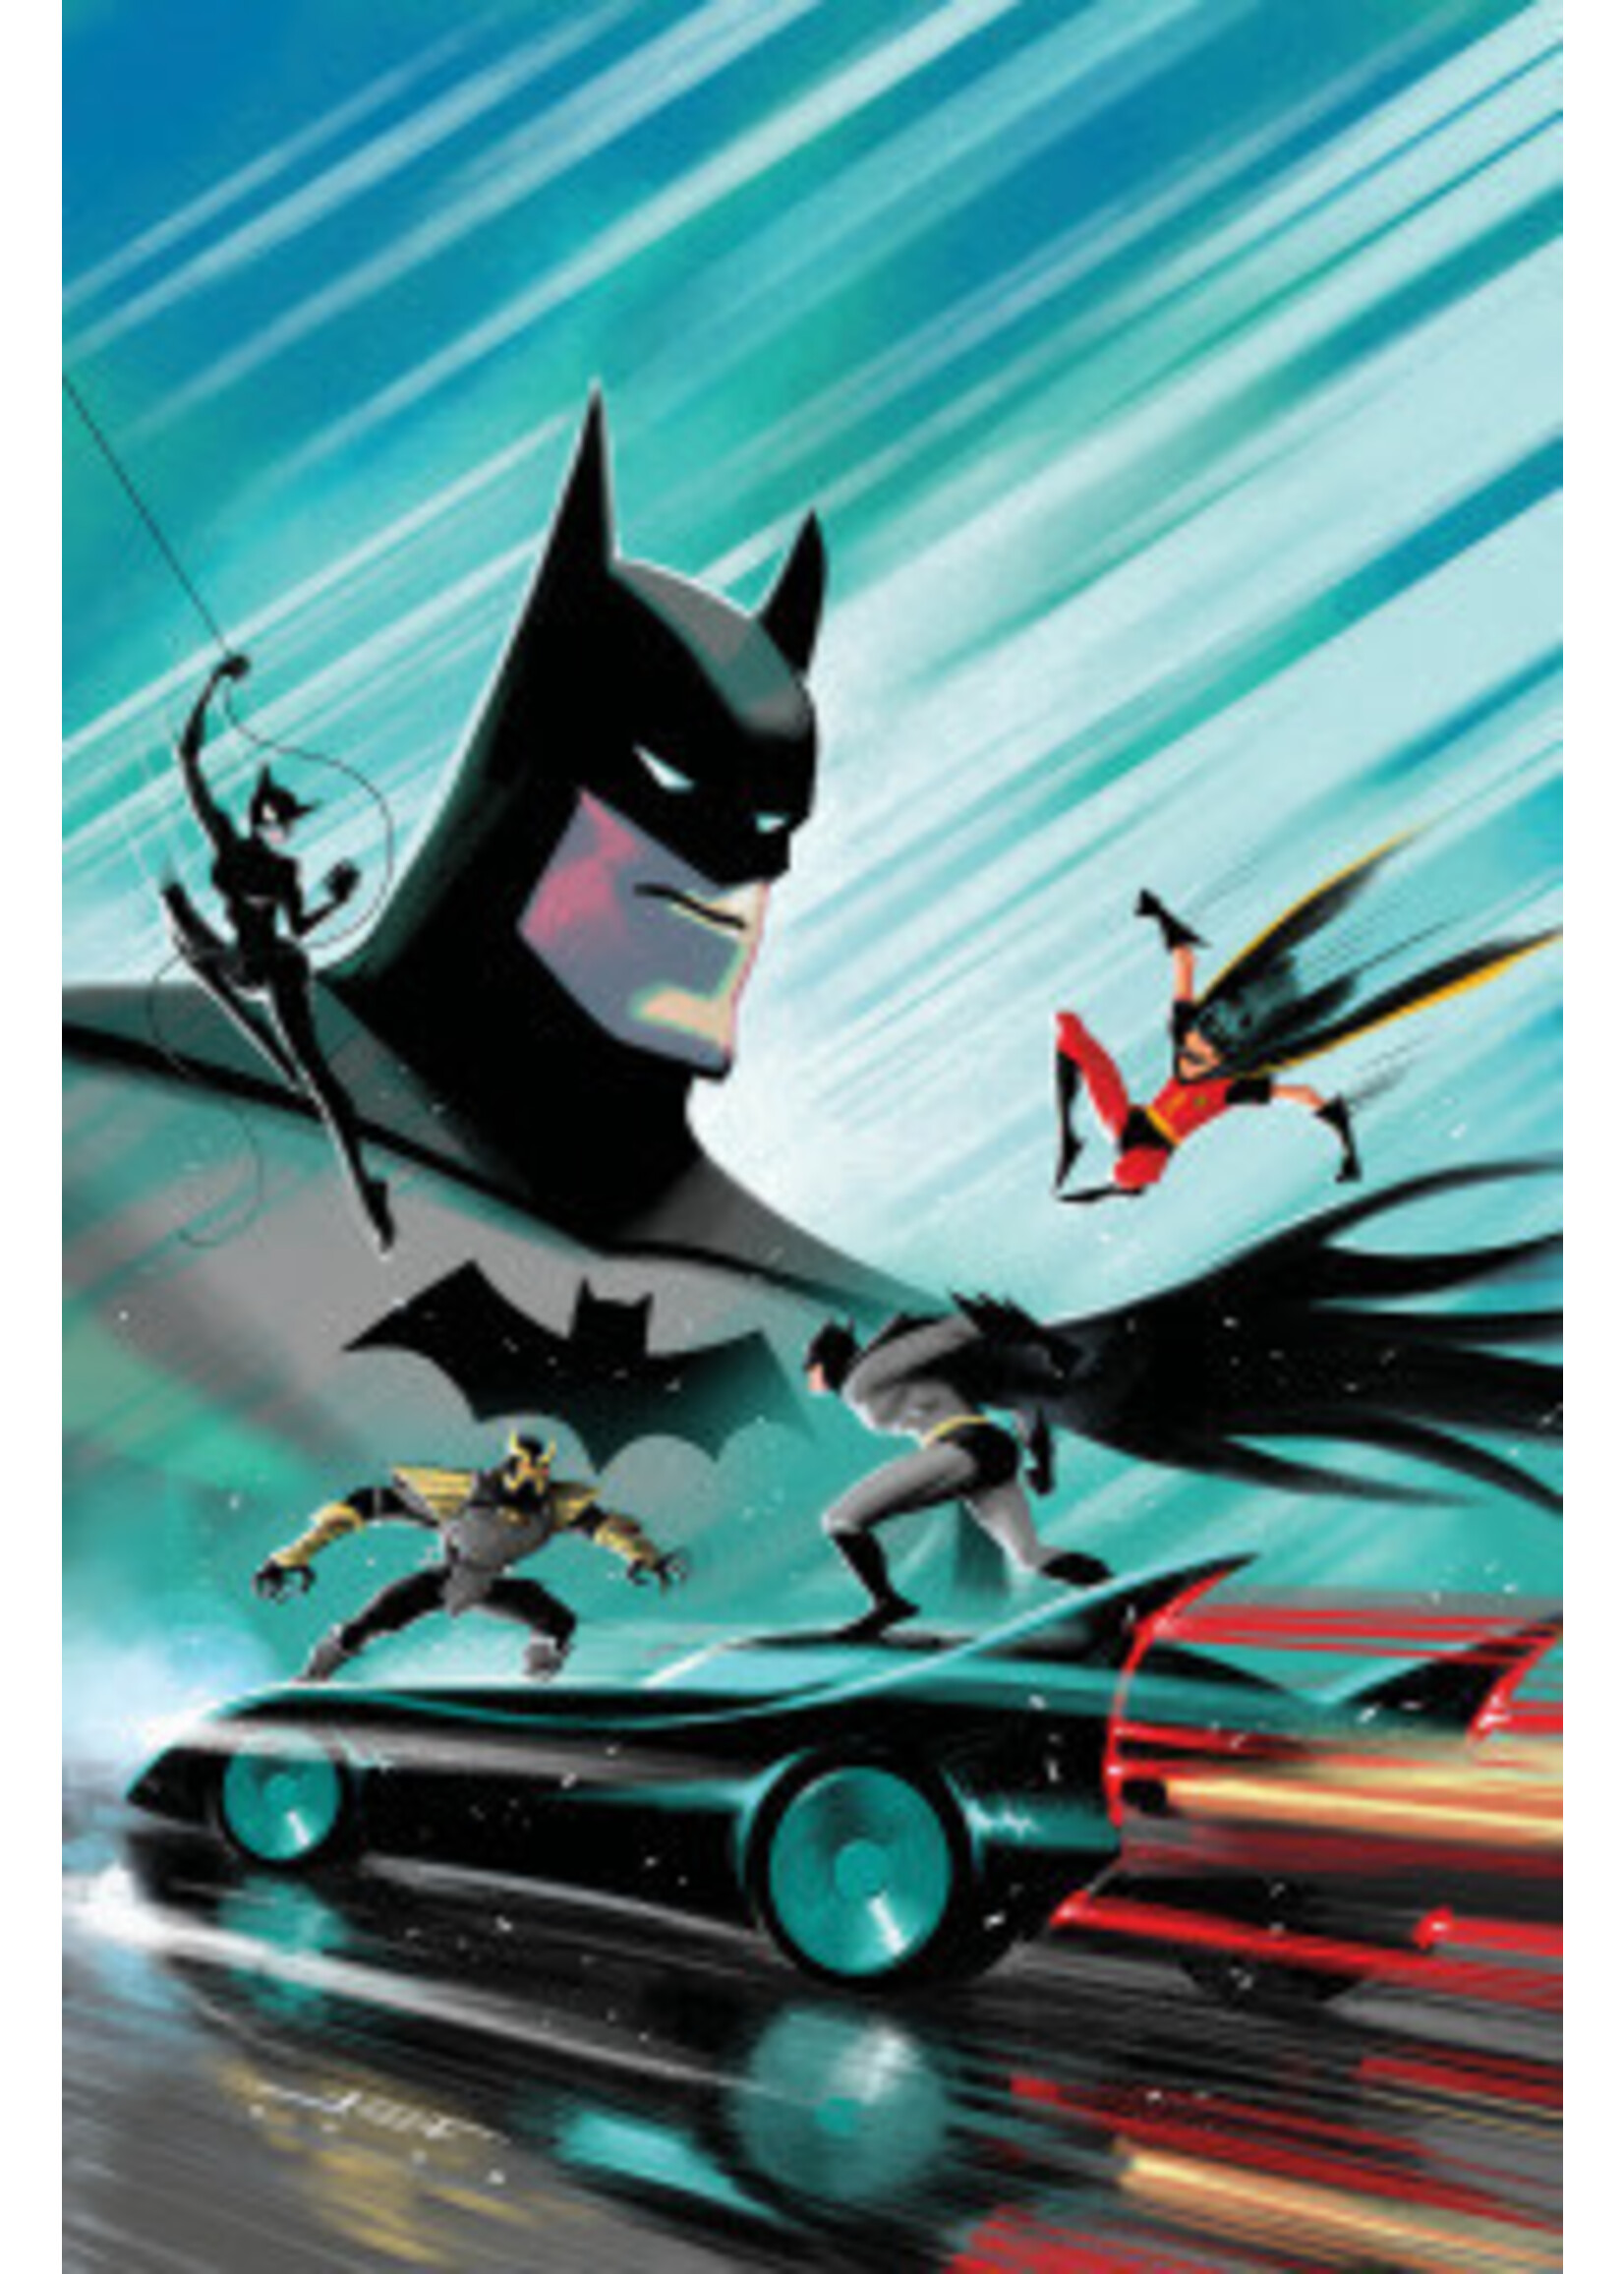 DC COMICS BATMAN ADVENTURES CONTINUE SEASON 3 complete 8 issue series